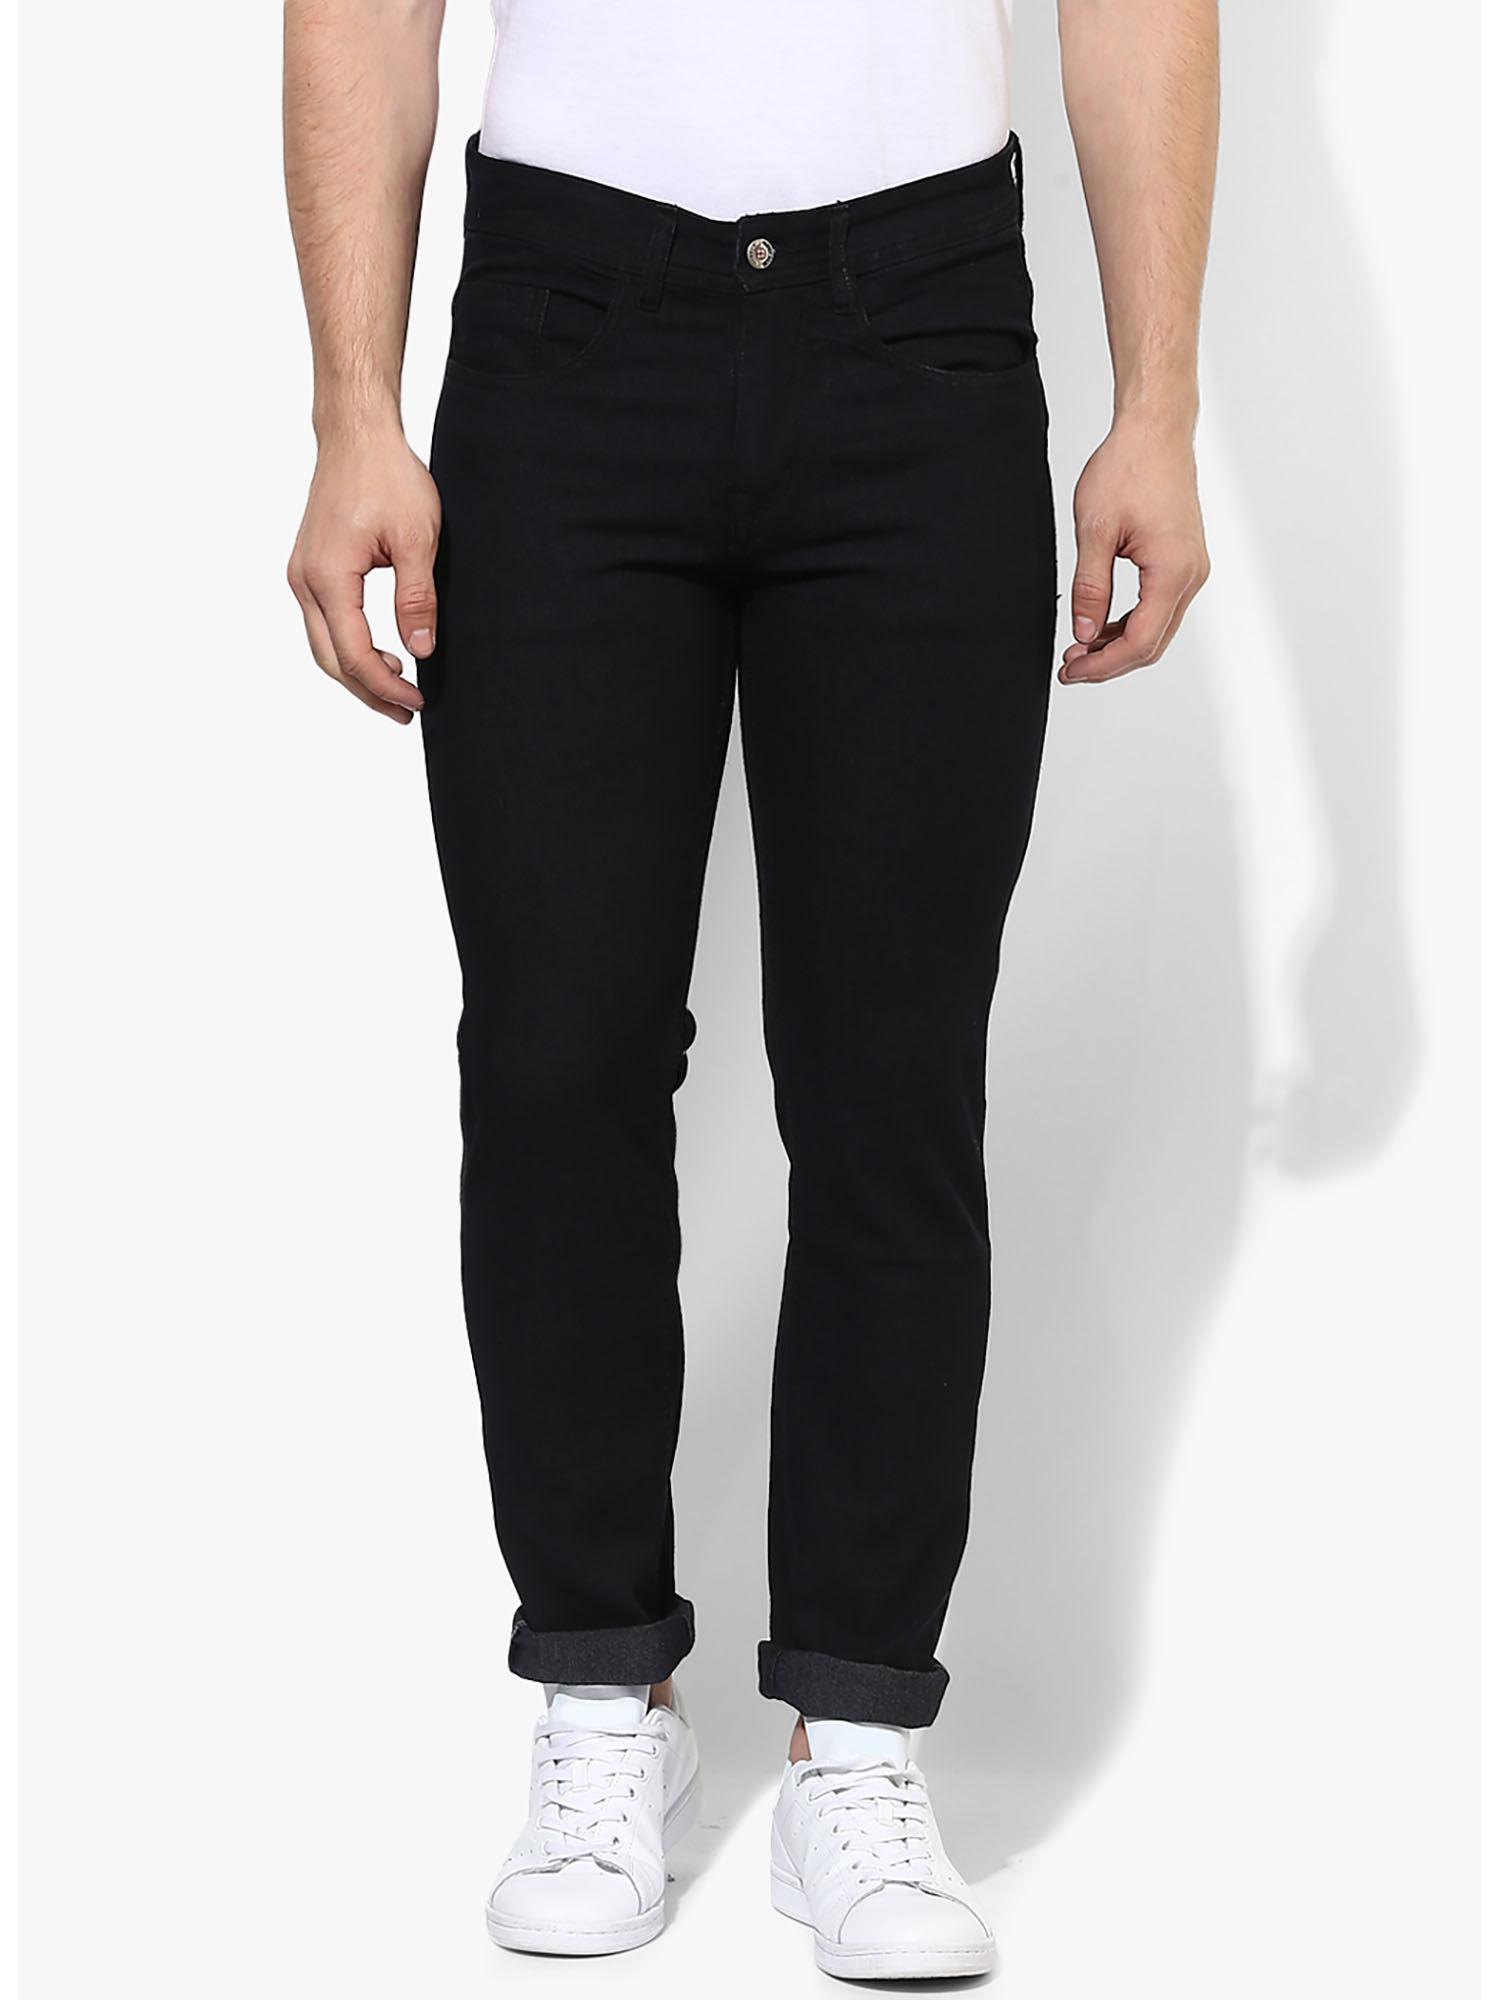 black solid jeans